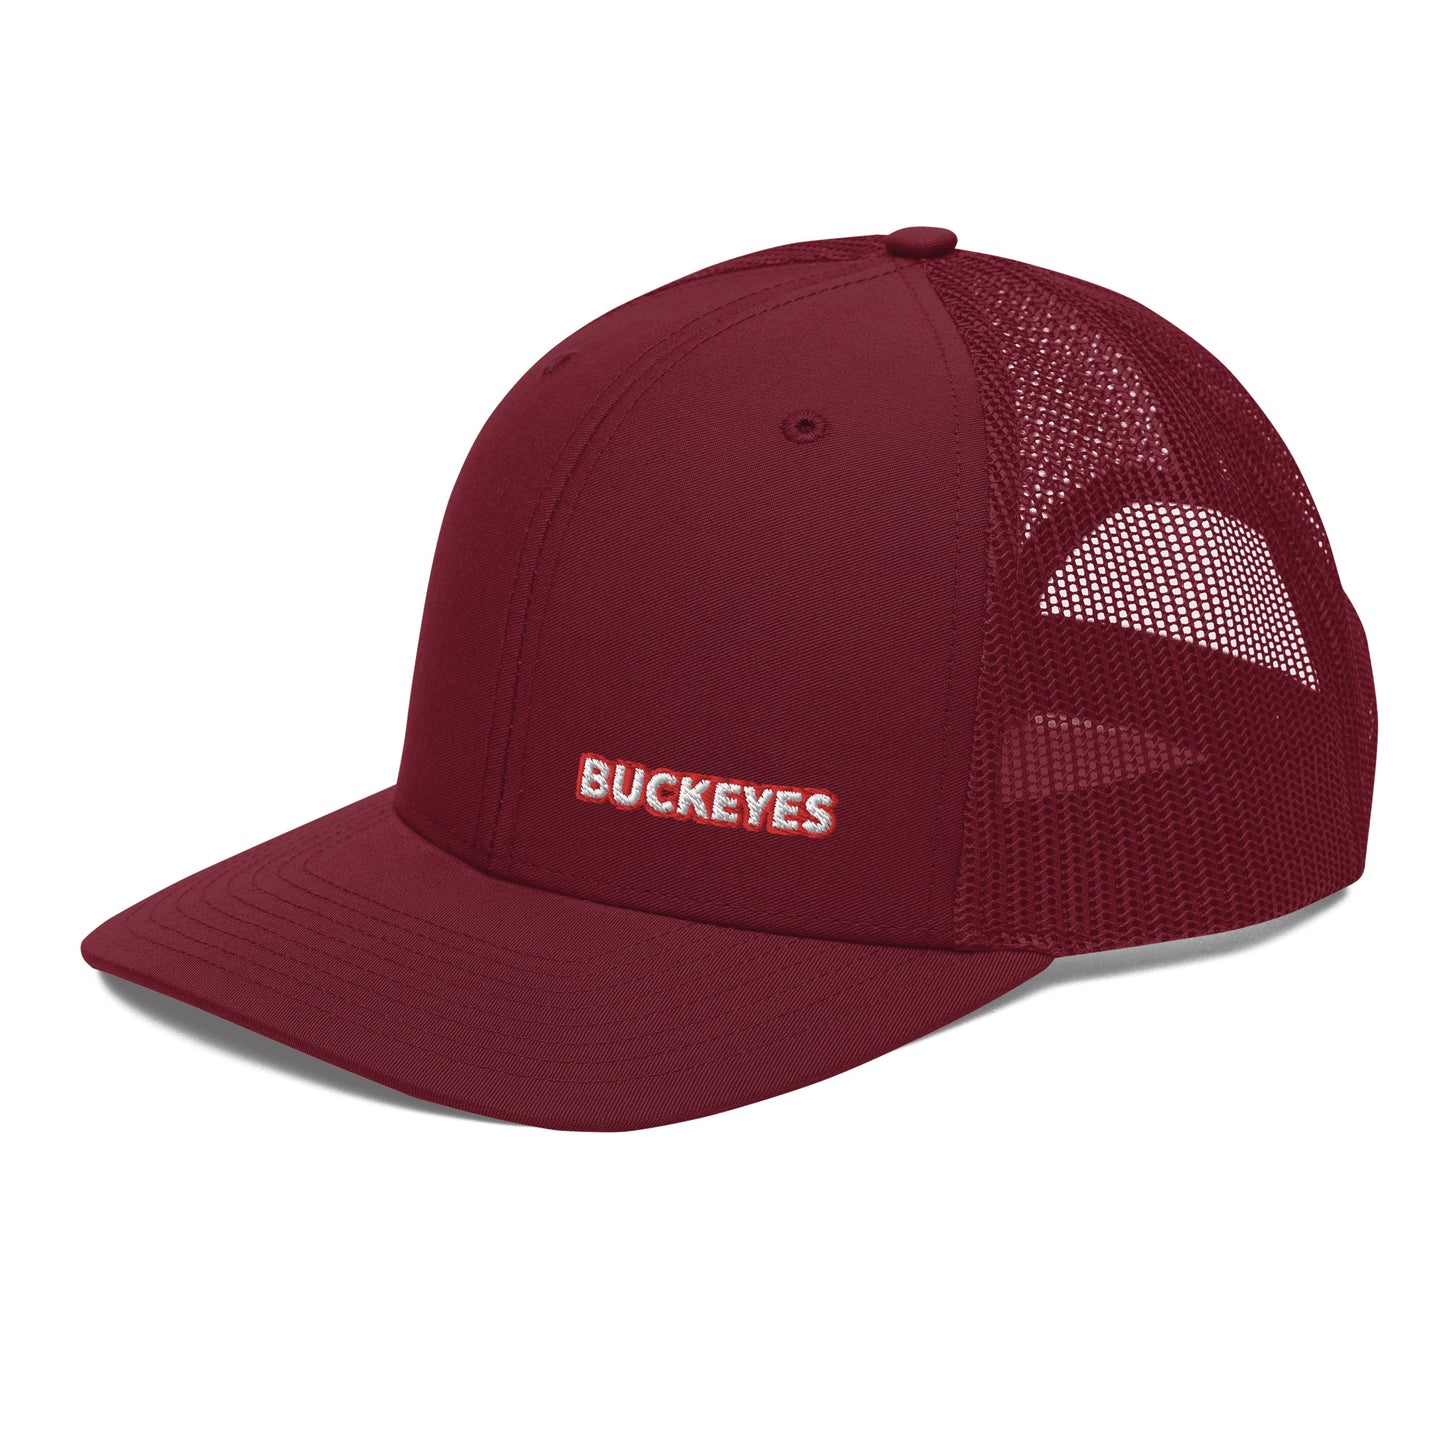 Ohio State Buckeyes Embroidered Trucker Cap